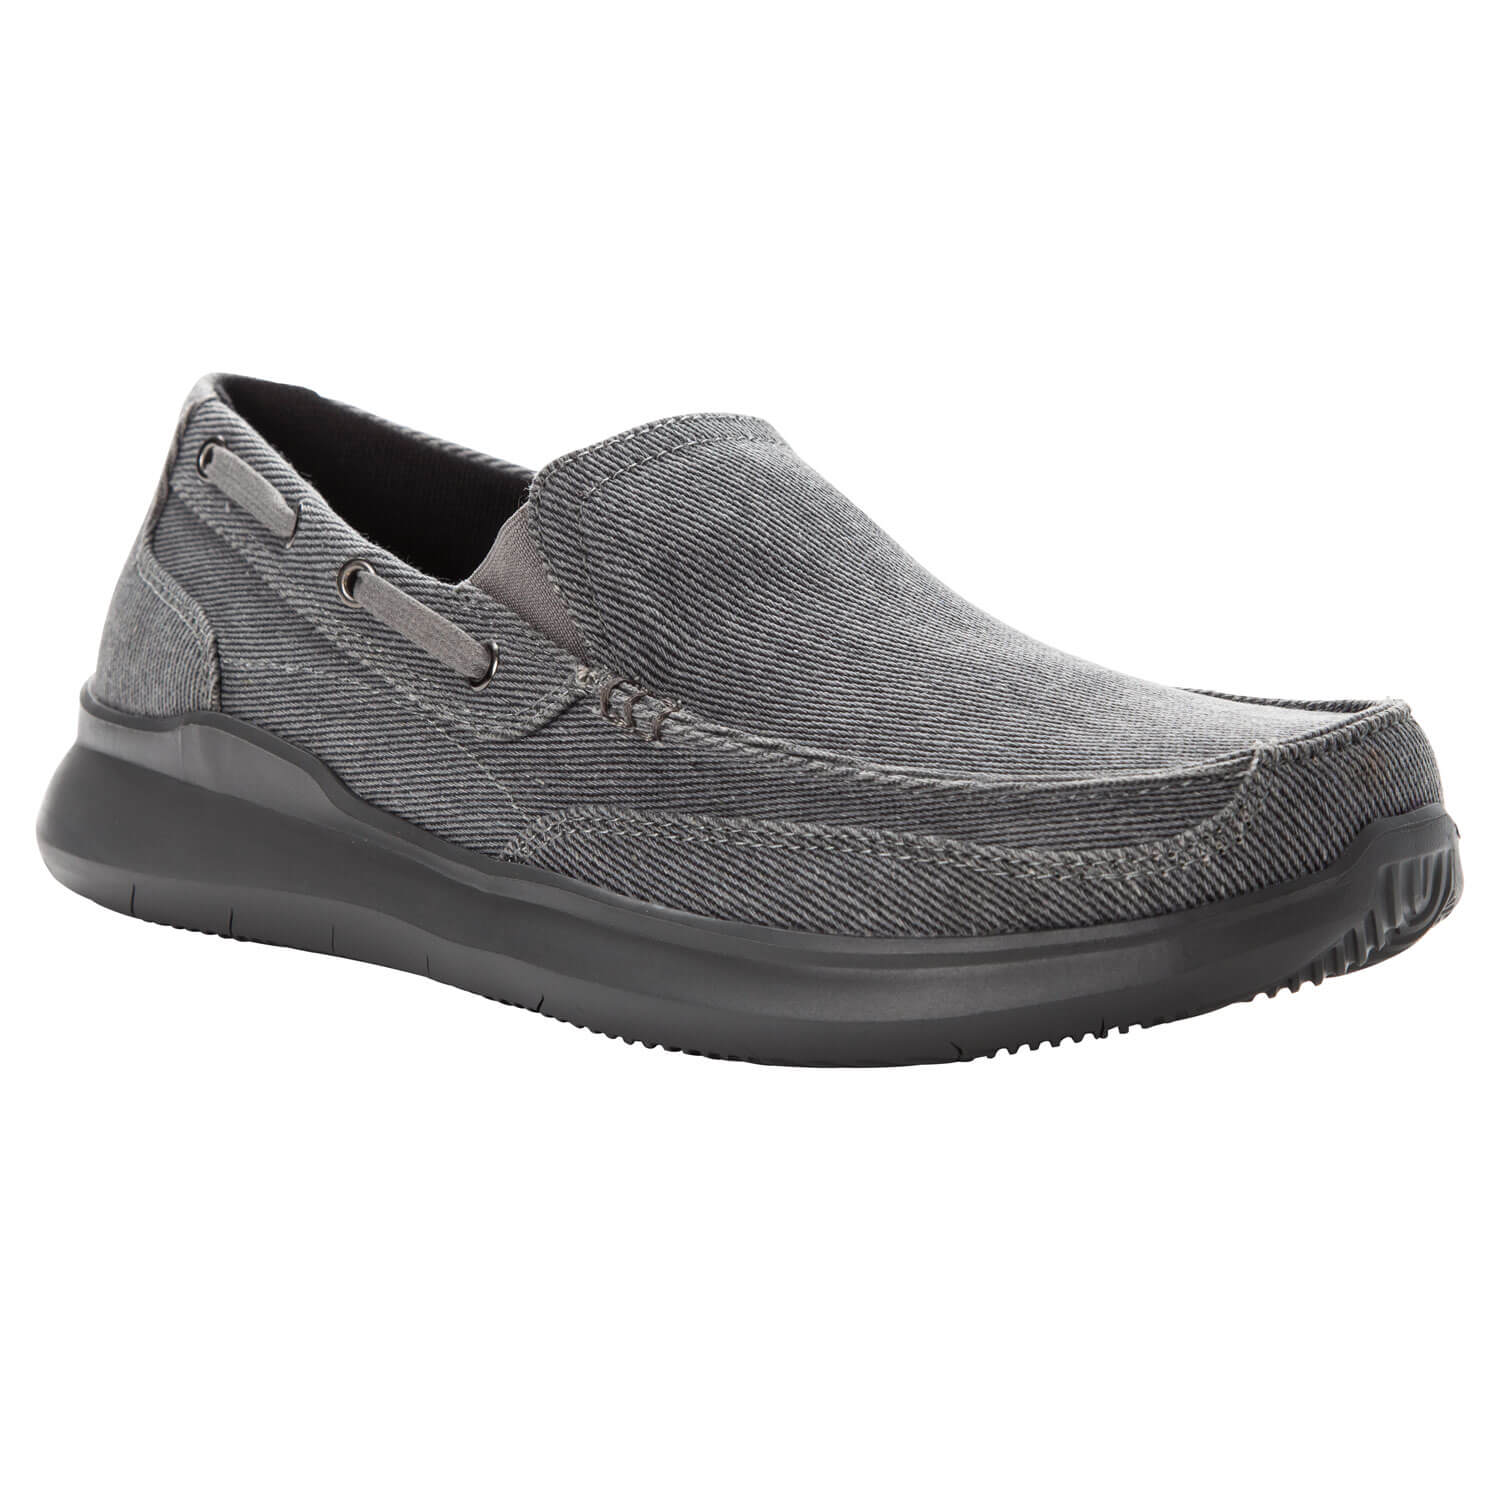 Propet Viasol - Men's Comfort Casual Slip-On Boat Shoes